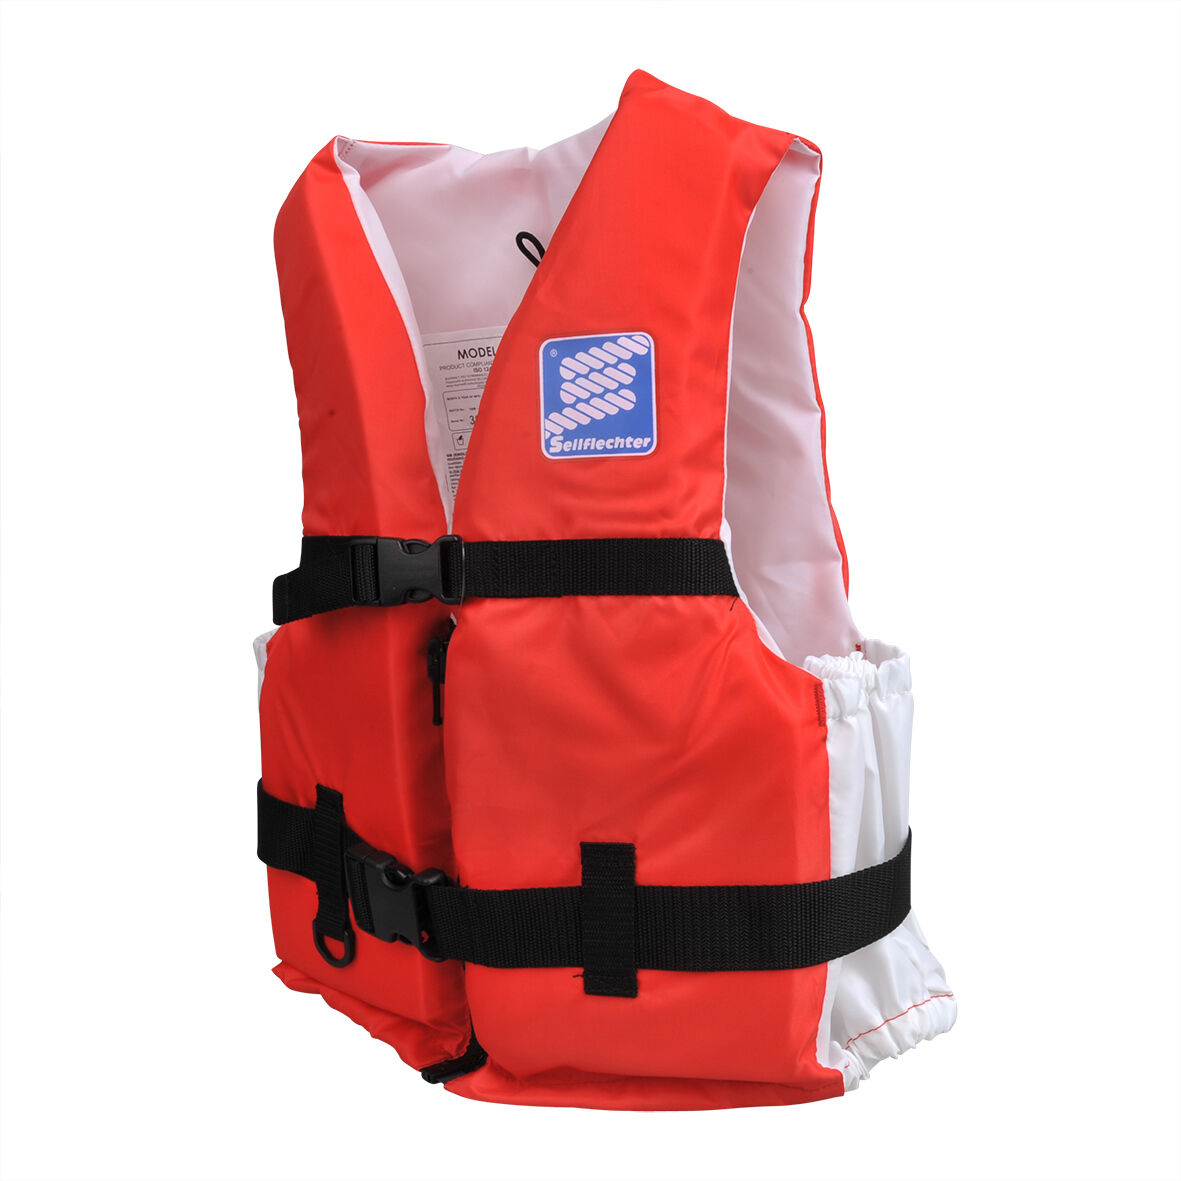 Seilflechter Lifejacket Classic XL> 60kg - 50N, ISO 12402-5 SF840240